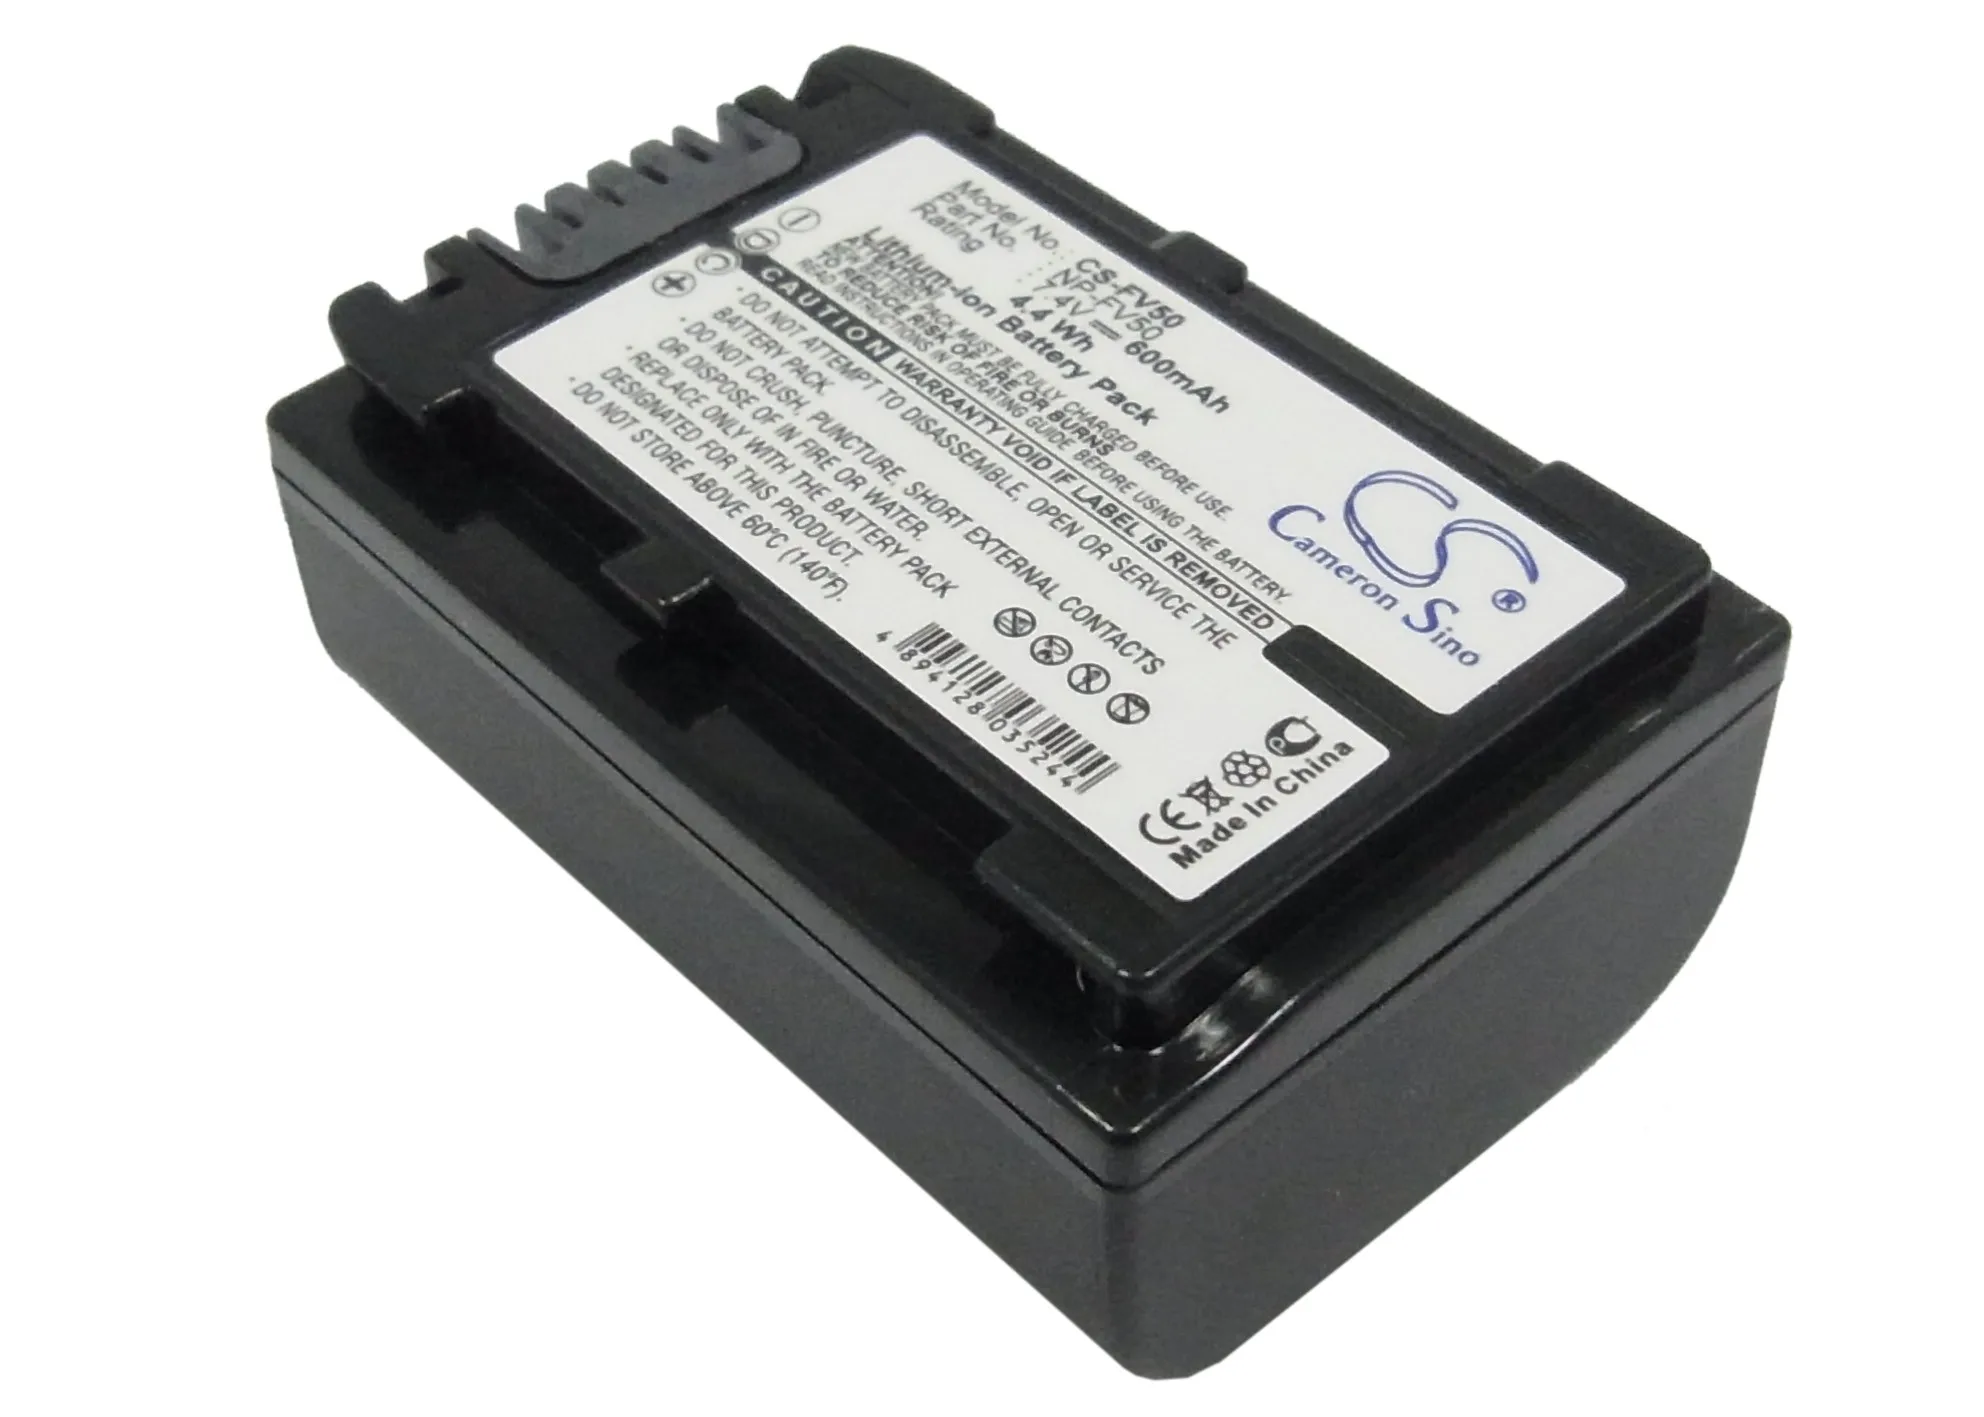 Cameron Sino Rechargeble Battery for Sony NEX-VG10E